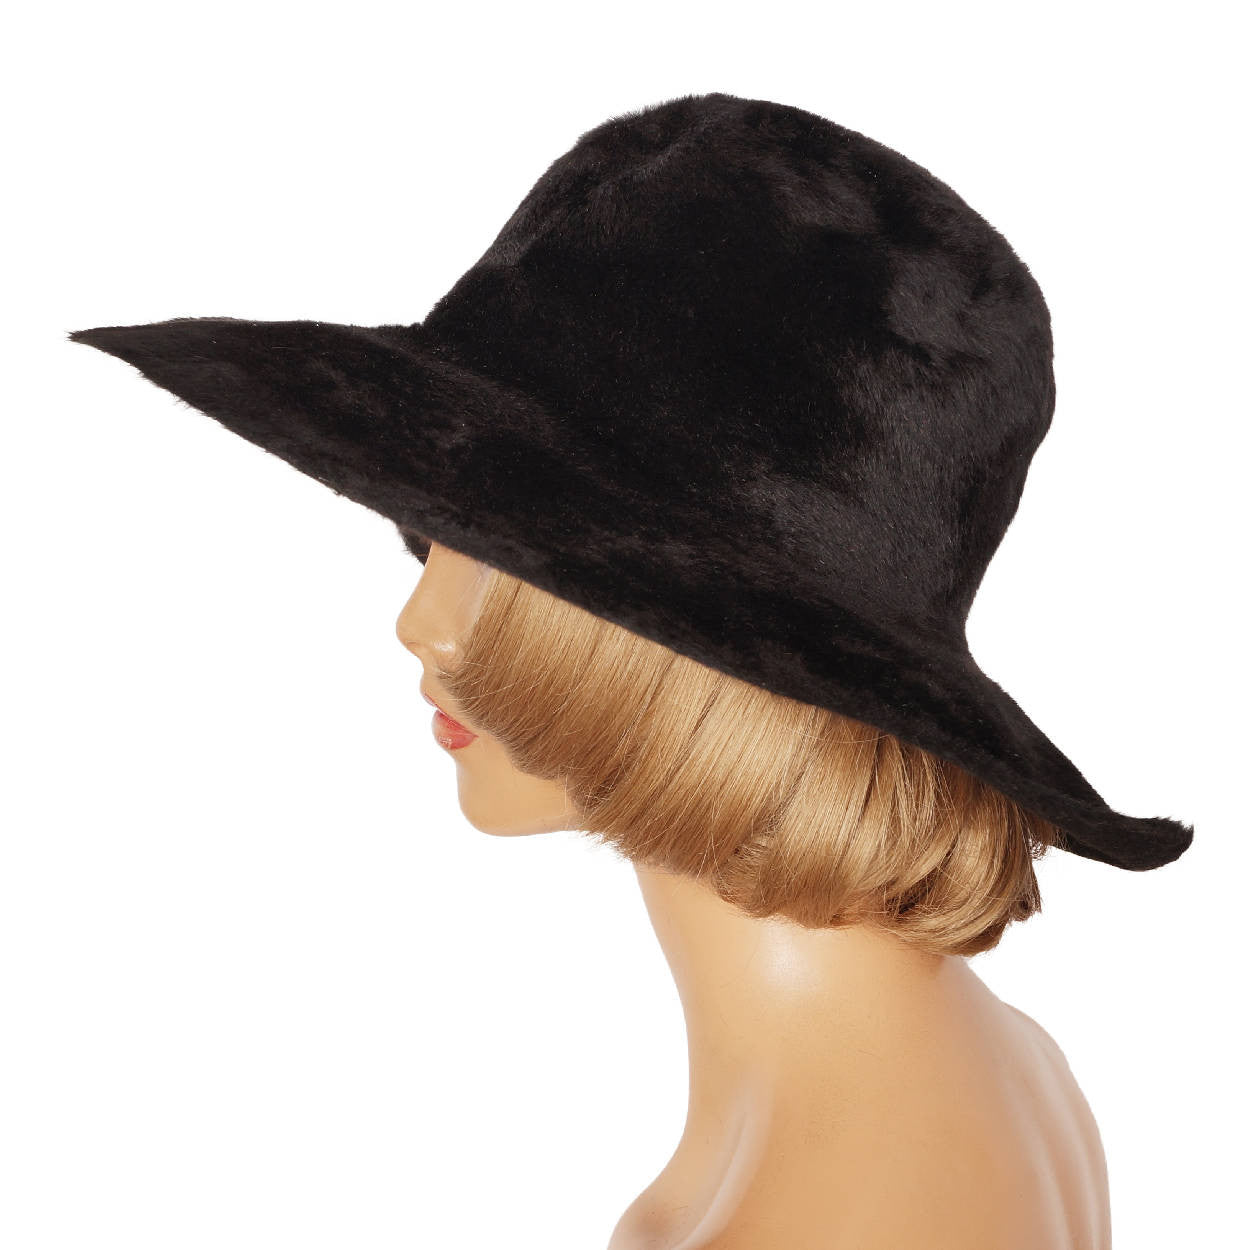 Vintage 1960s Floppy Hippie Era Hat Plush Black Felt Ladies Size M